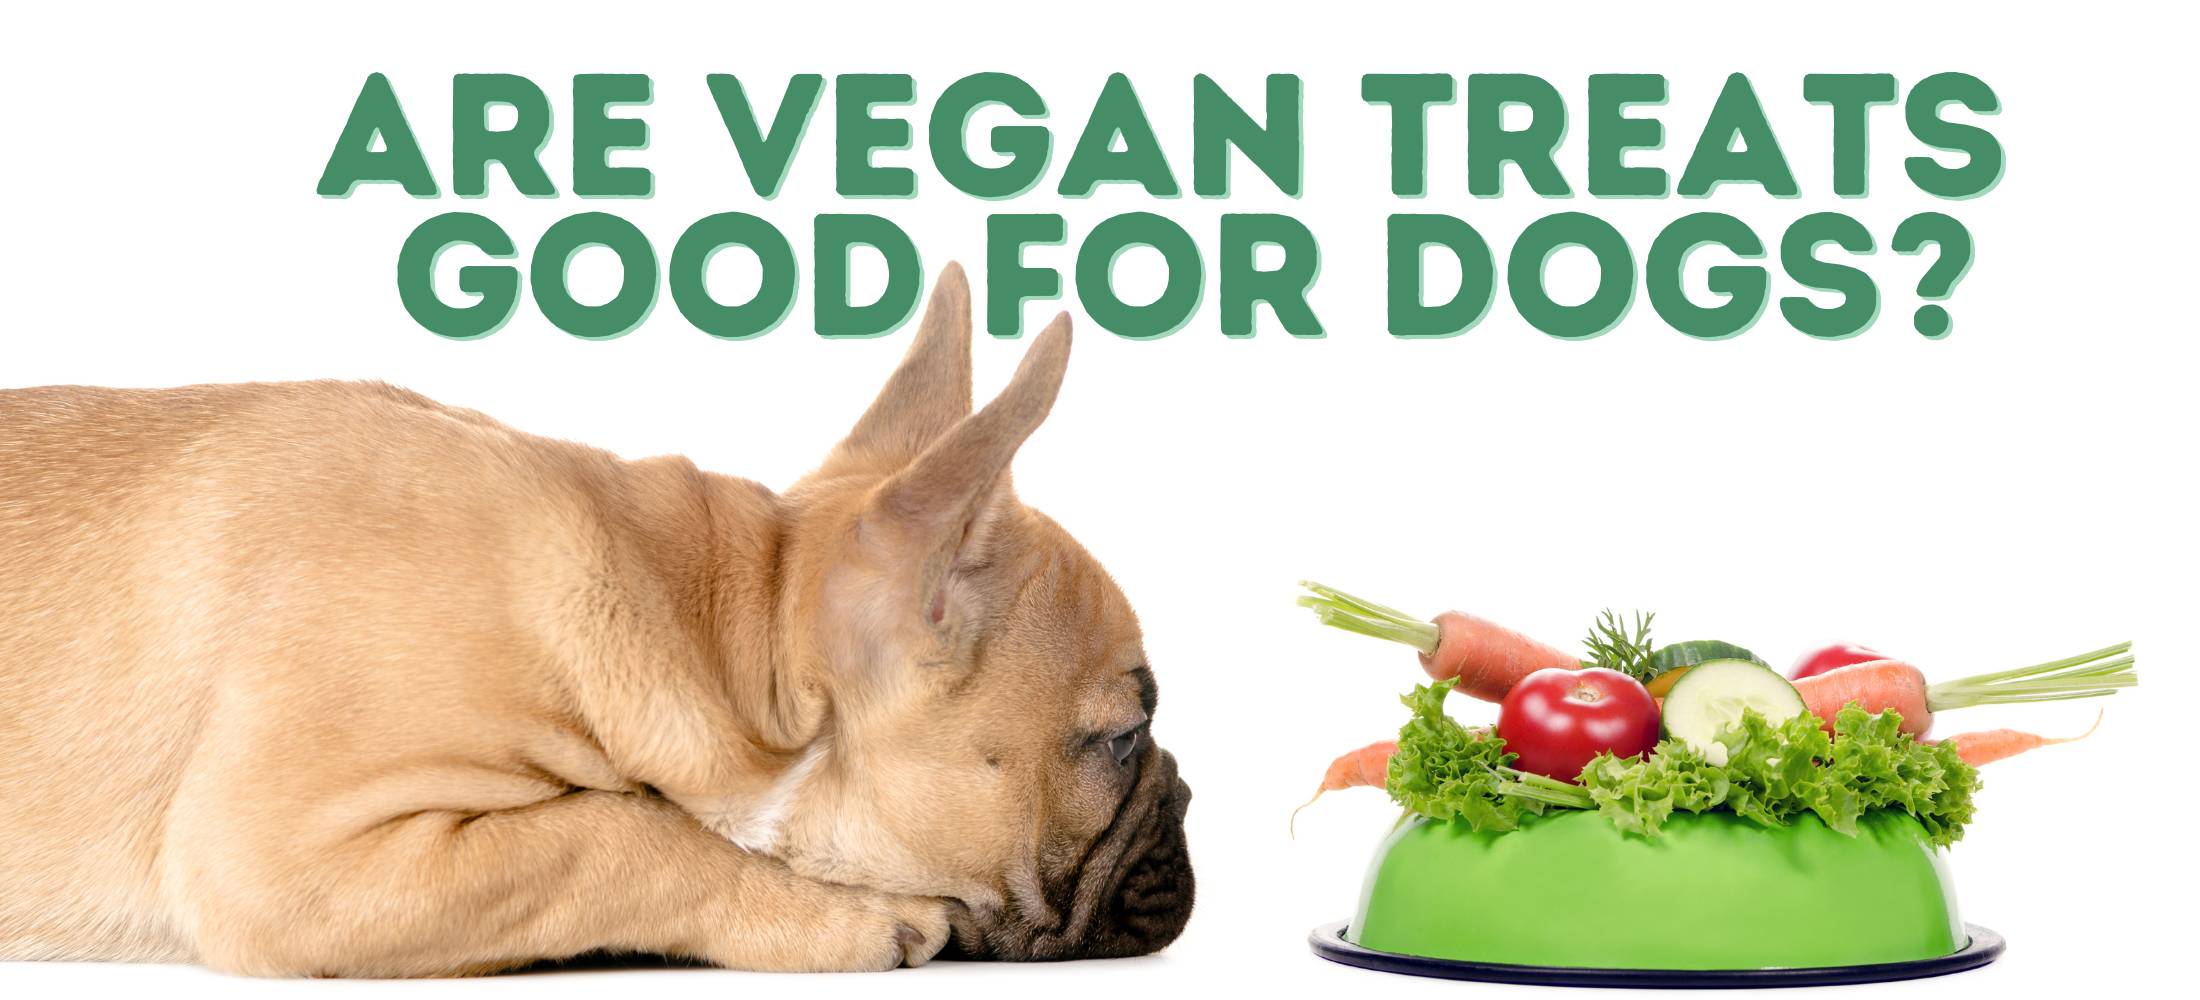 A French Bulldog stares at a plate of vegan dog treats